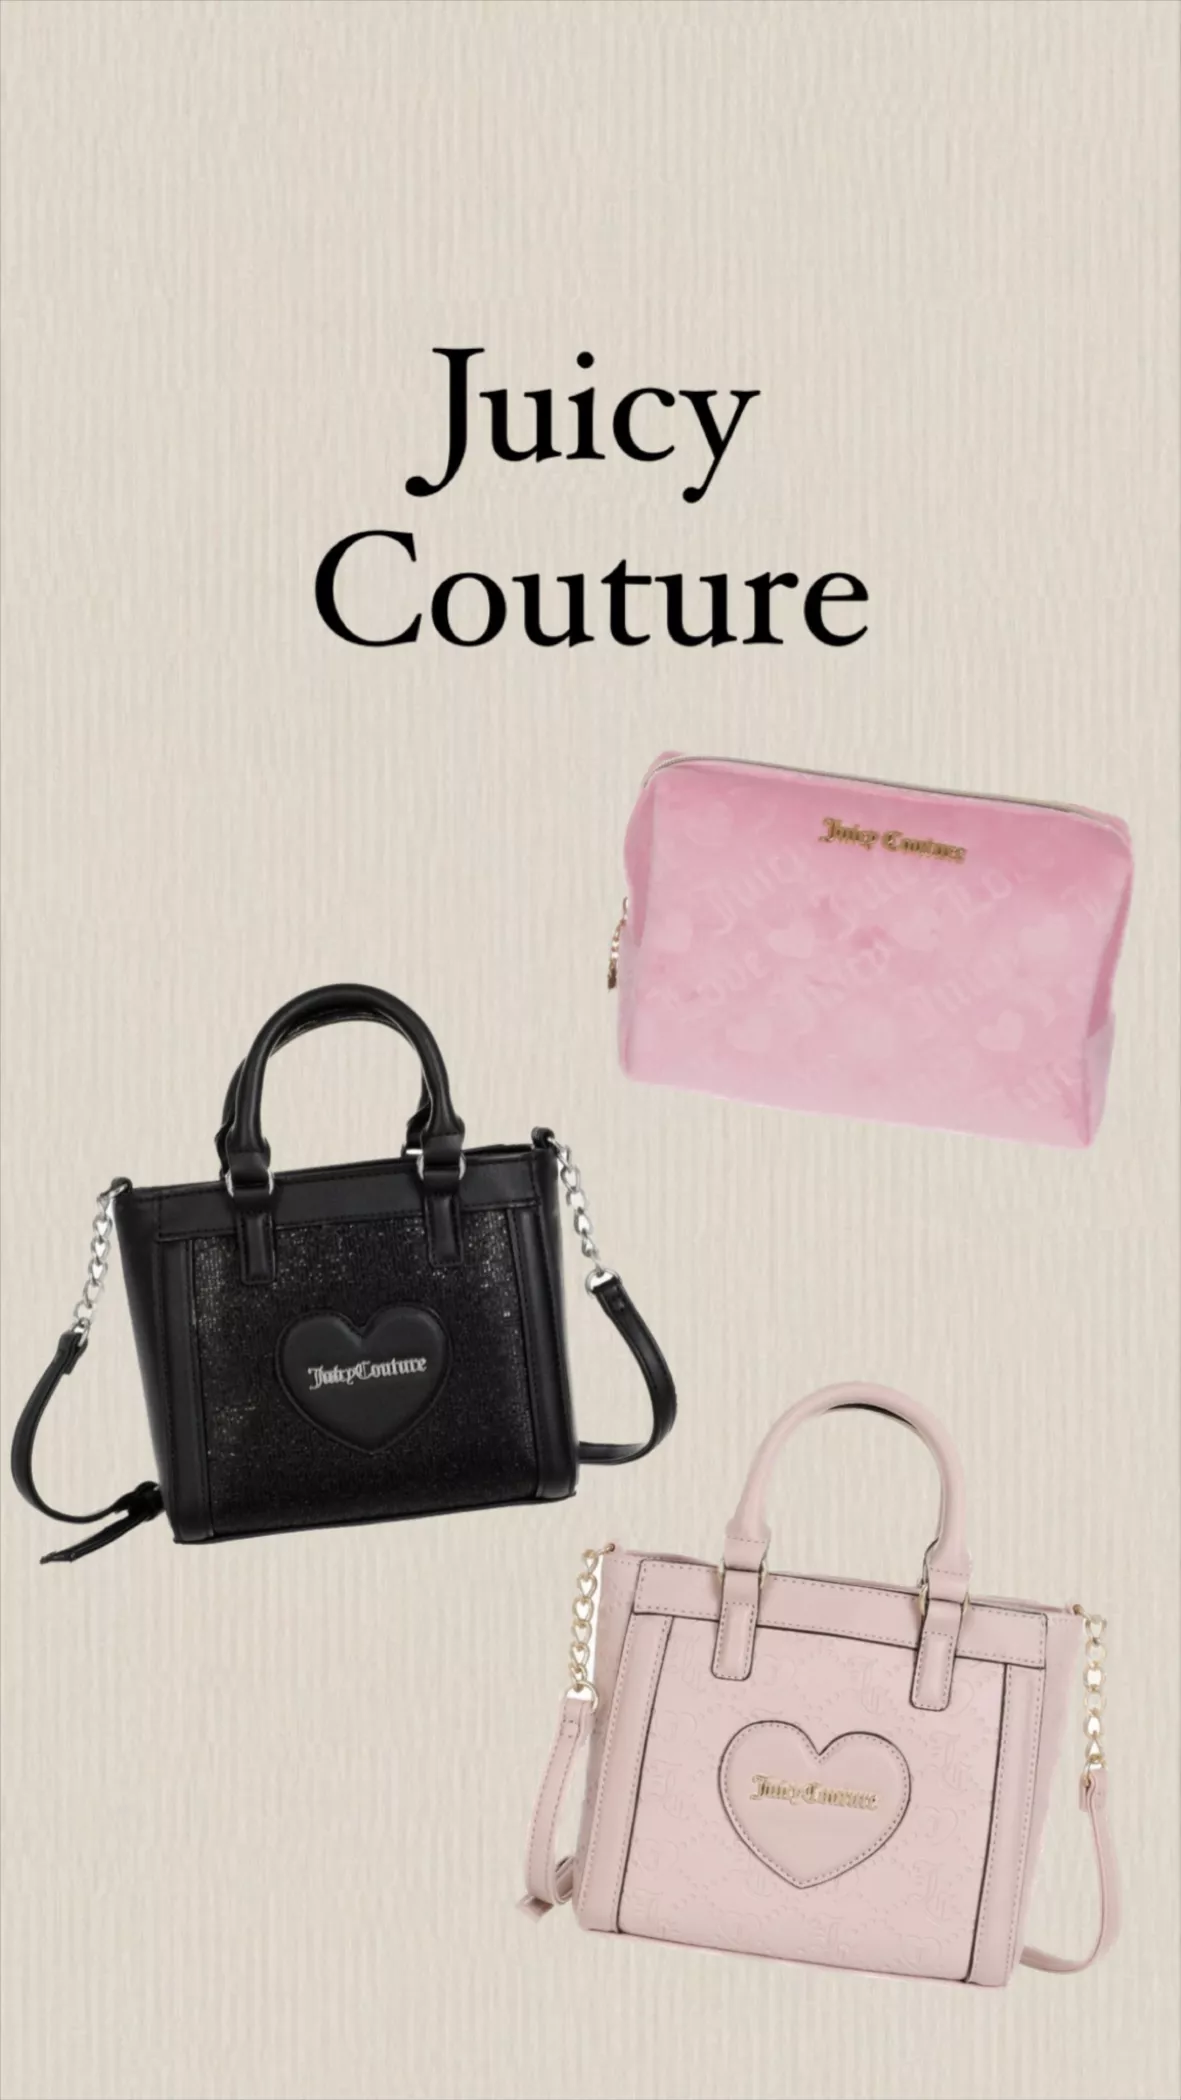 Juicy couture items satchel